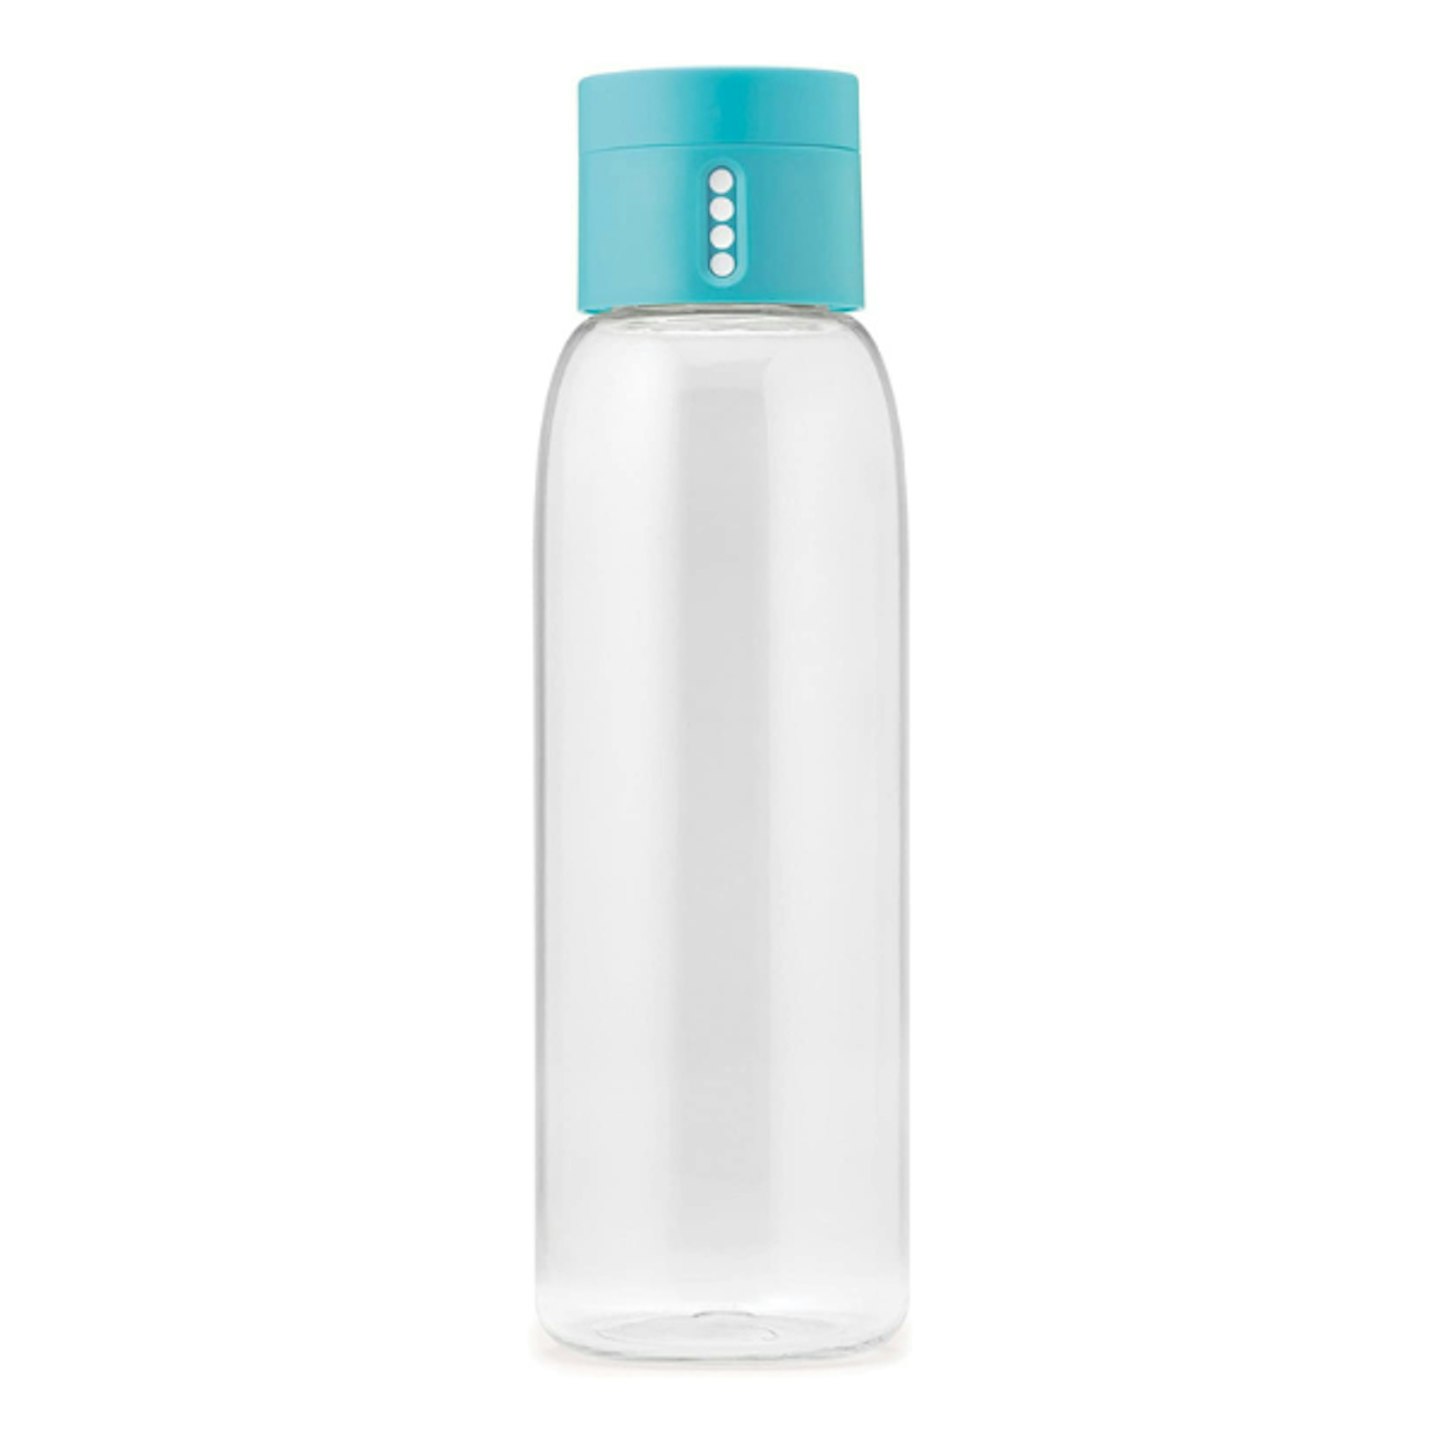 Best Smart Water Bottles 2022: Reviews of Hydration-Tracking Bottles